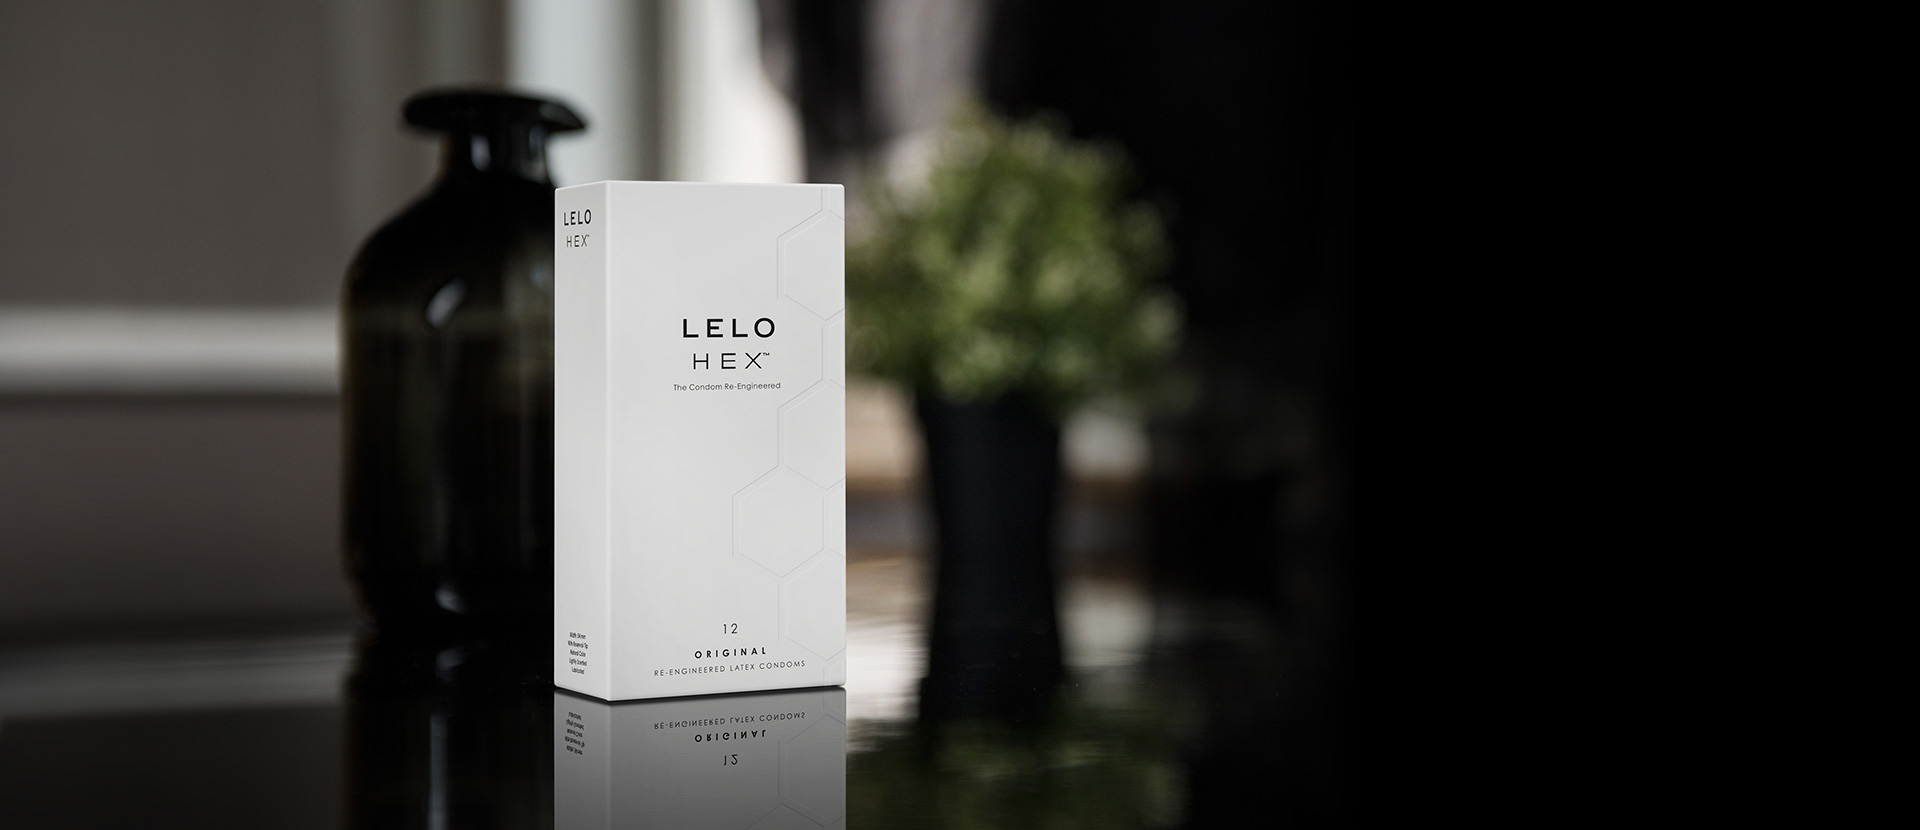 Lelo Hex Condom Package Design